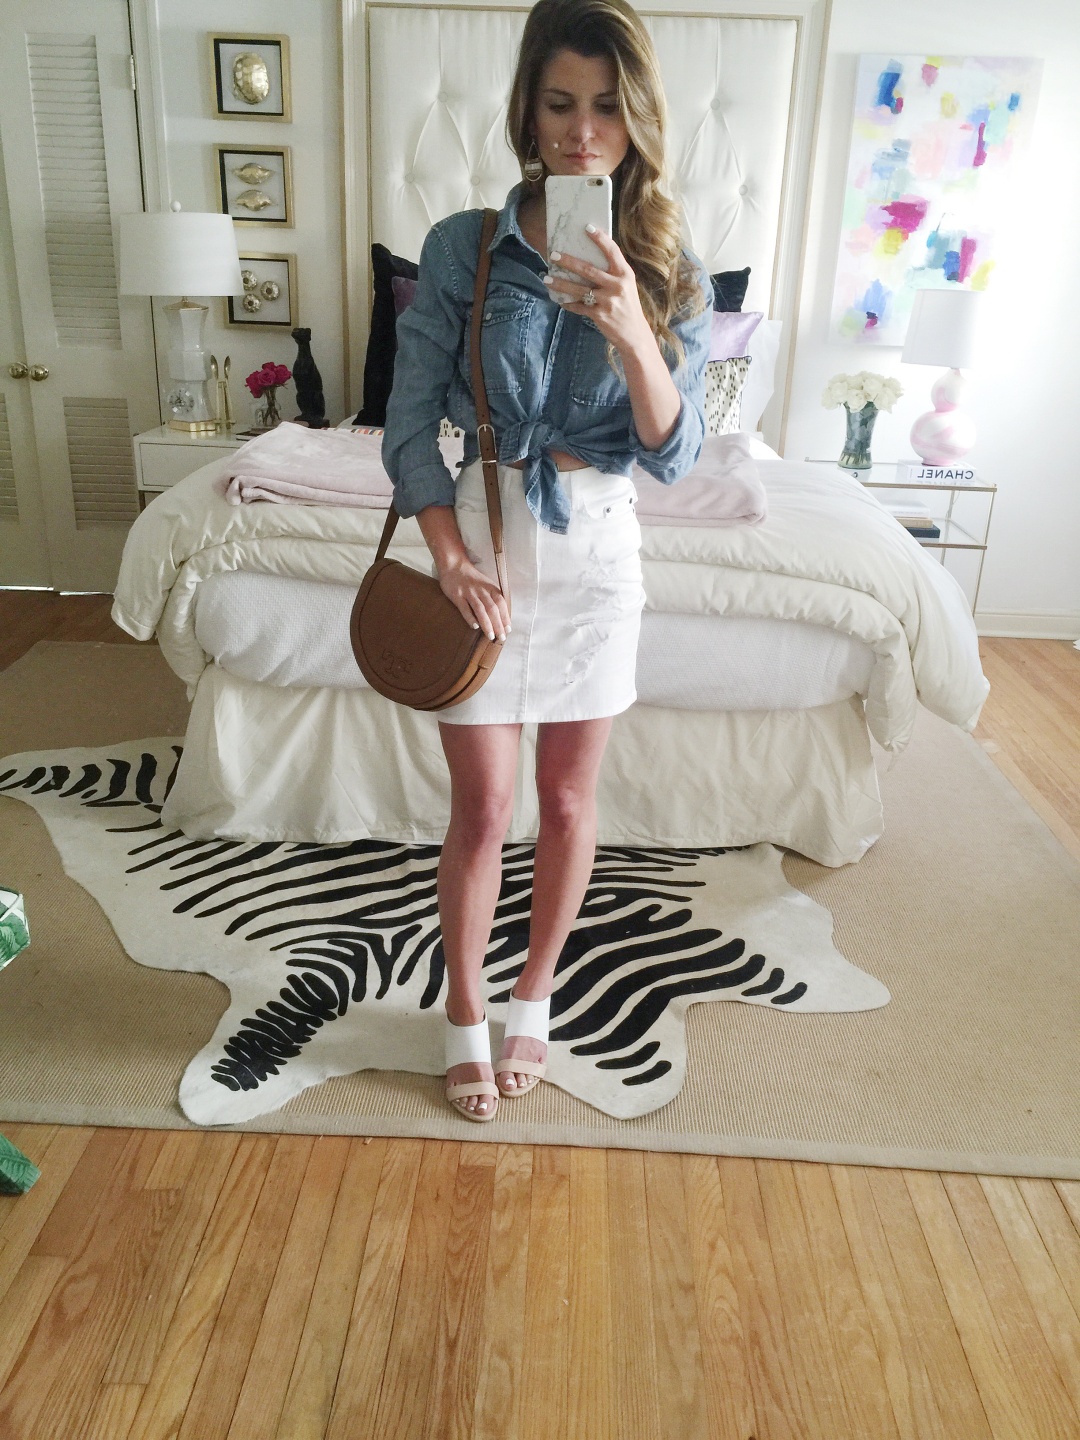 @brightonkeller wearing high-waisted mini skirt with tied up chamnray mirror selfie